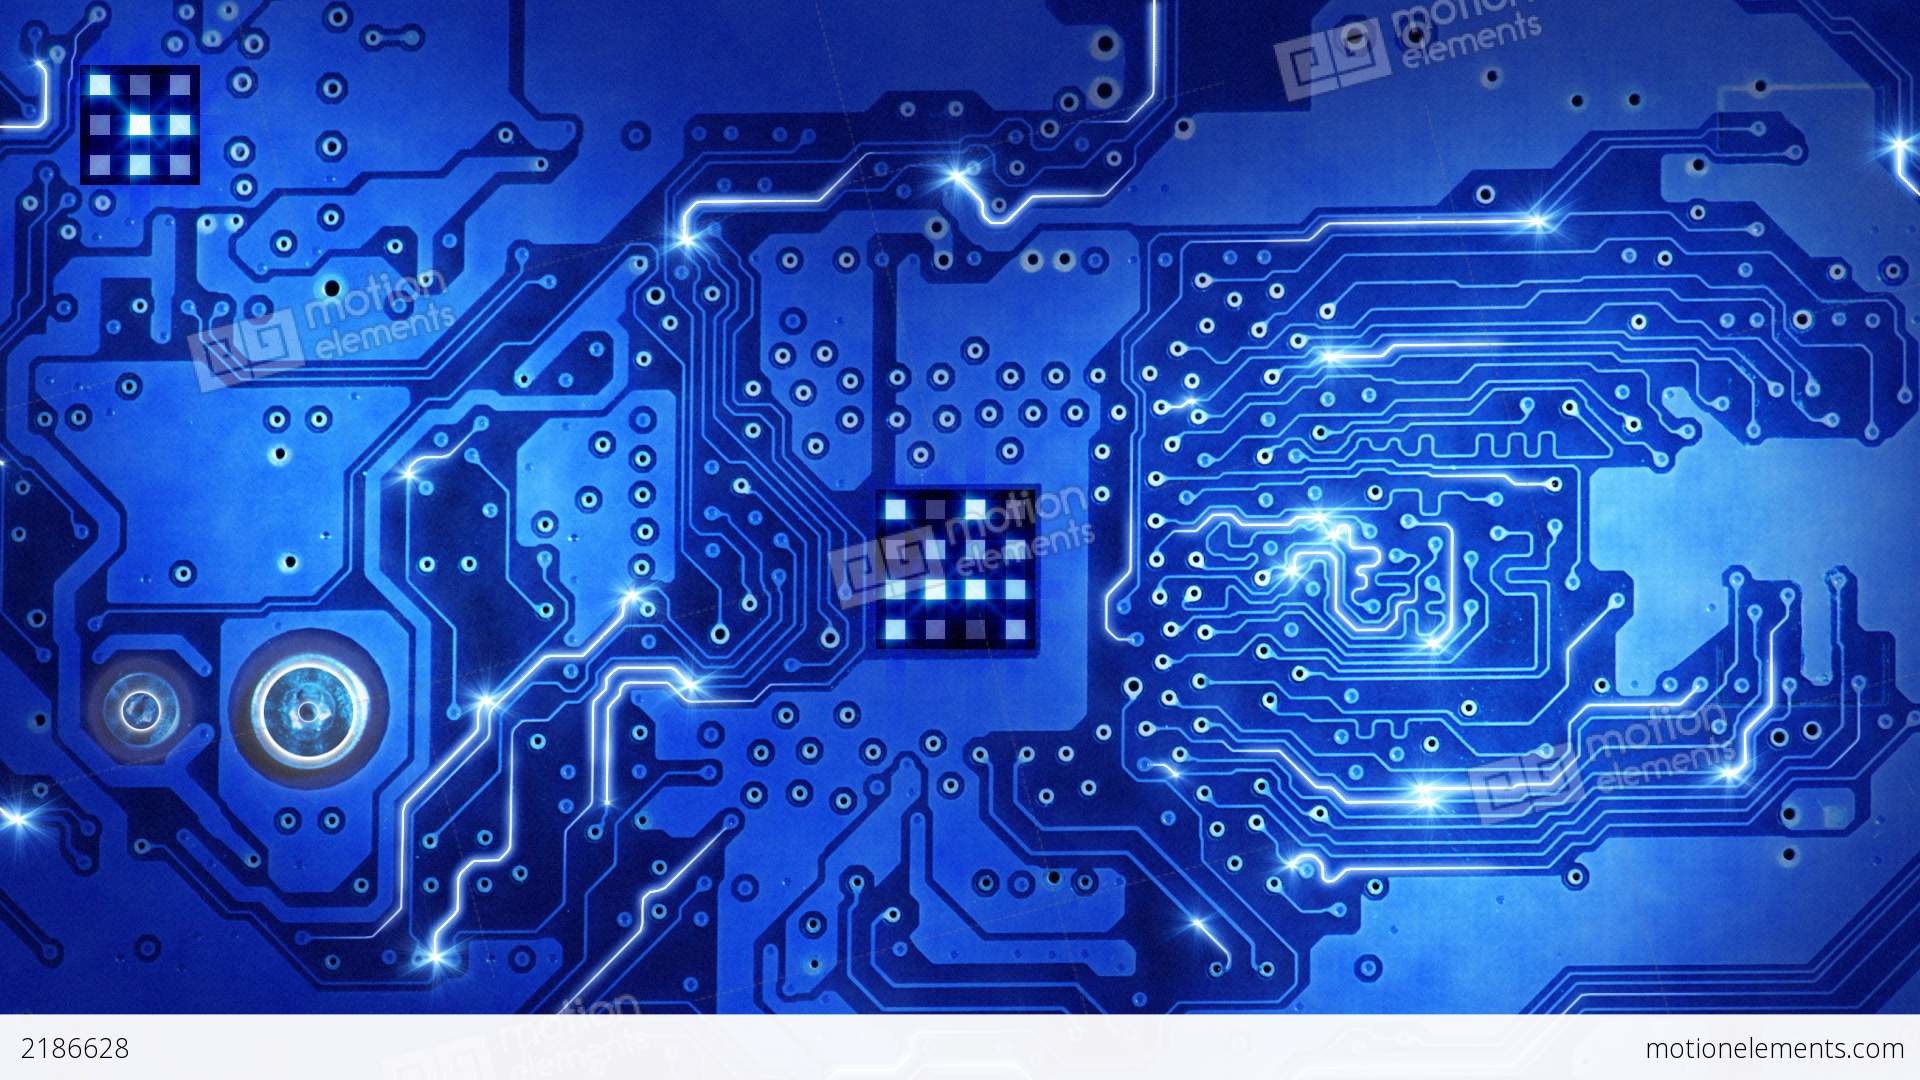 motherboard wallpaper,blue,electronic engineering,motherboard,electronics,electronic component